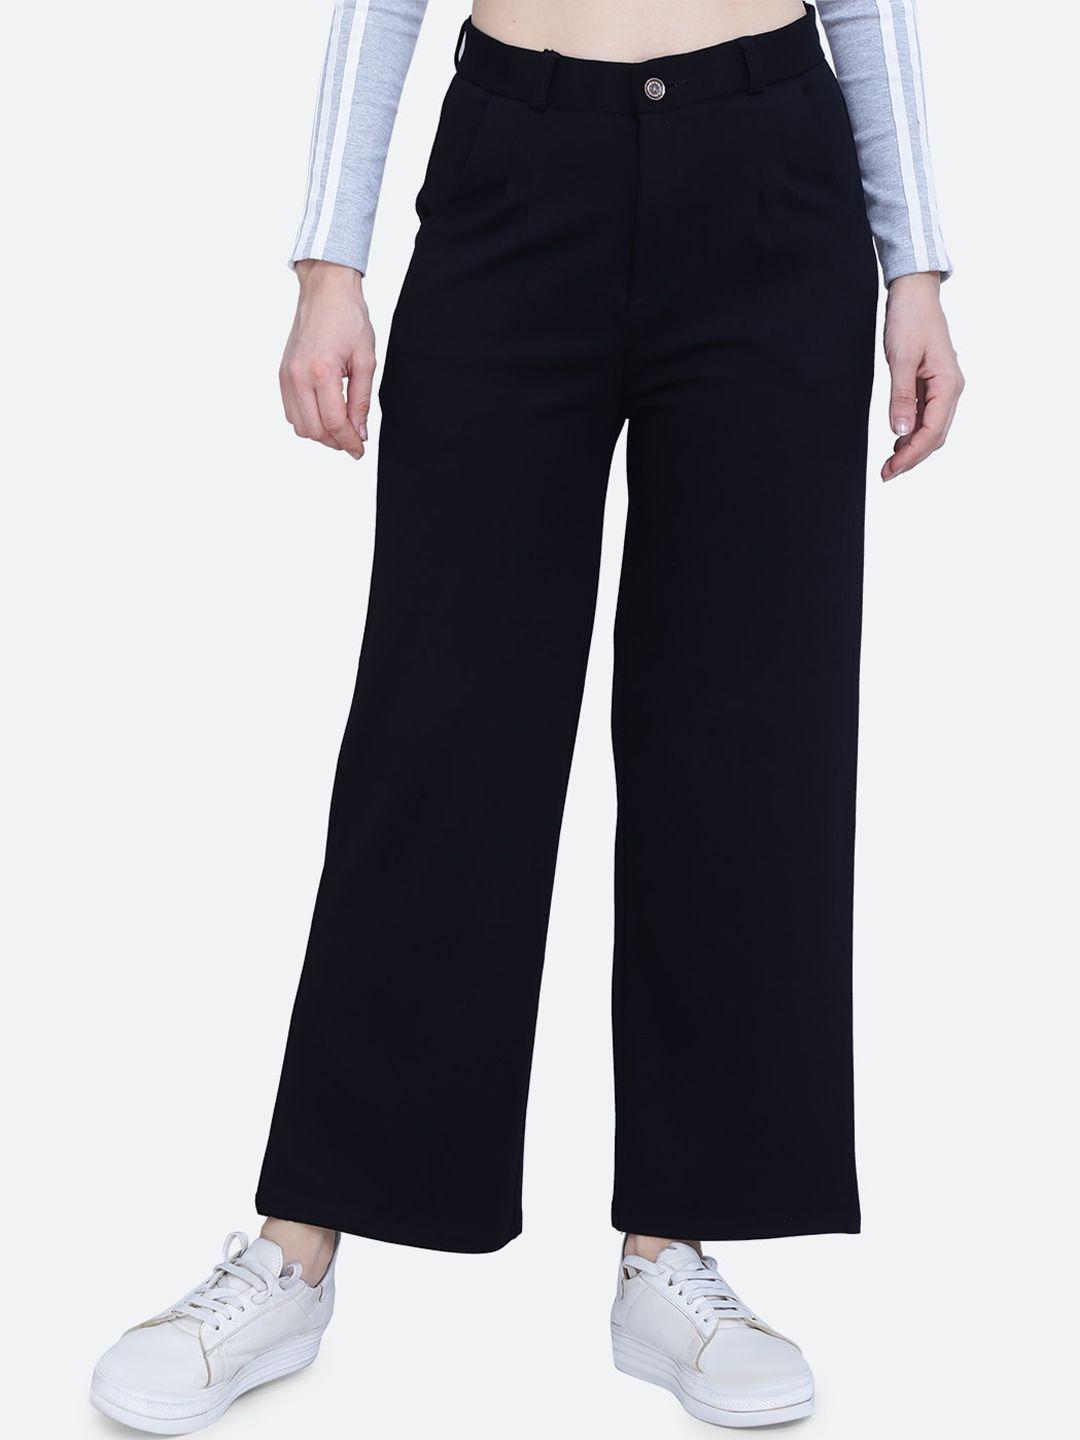 fck-3-women-original-loose-fit-high-rise-parallel-trousers